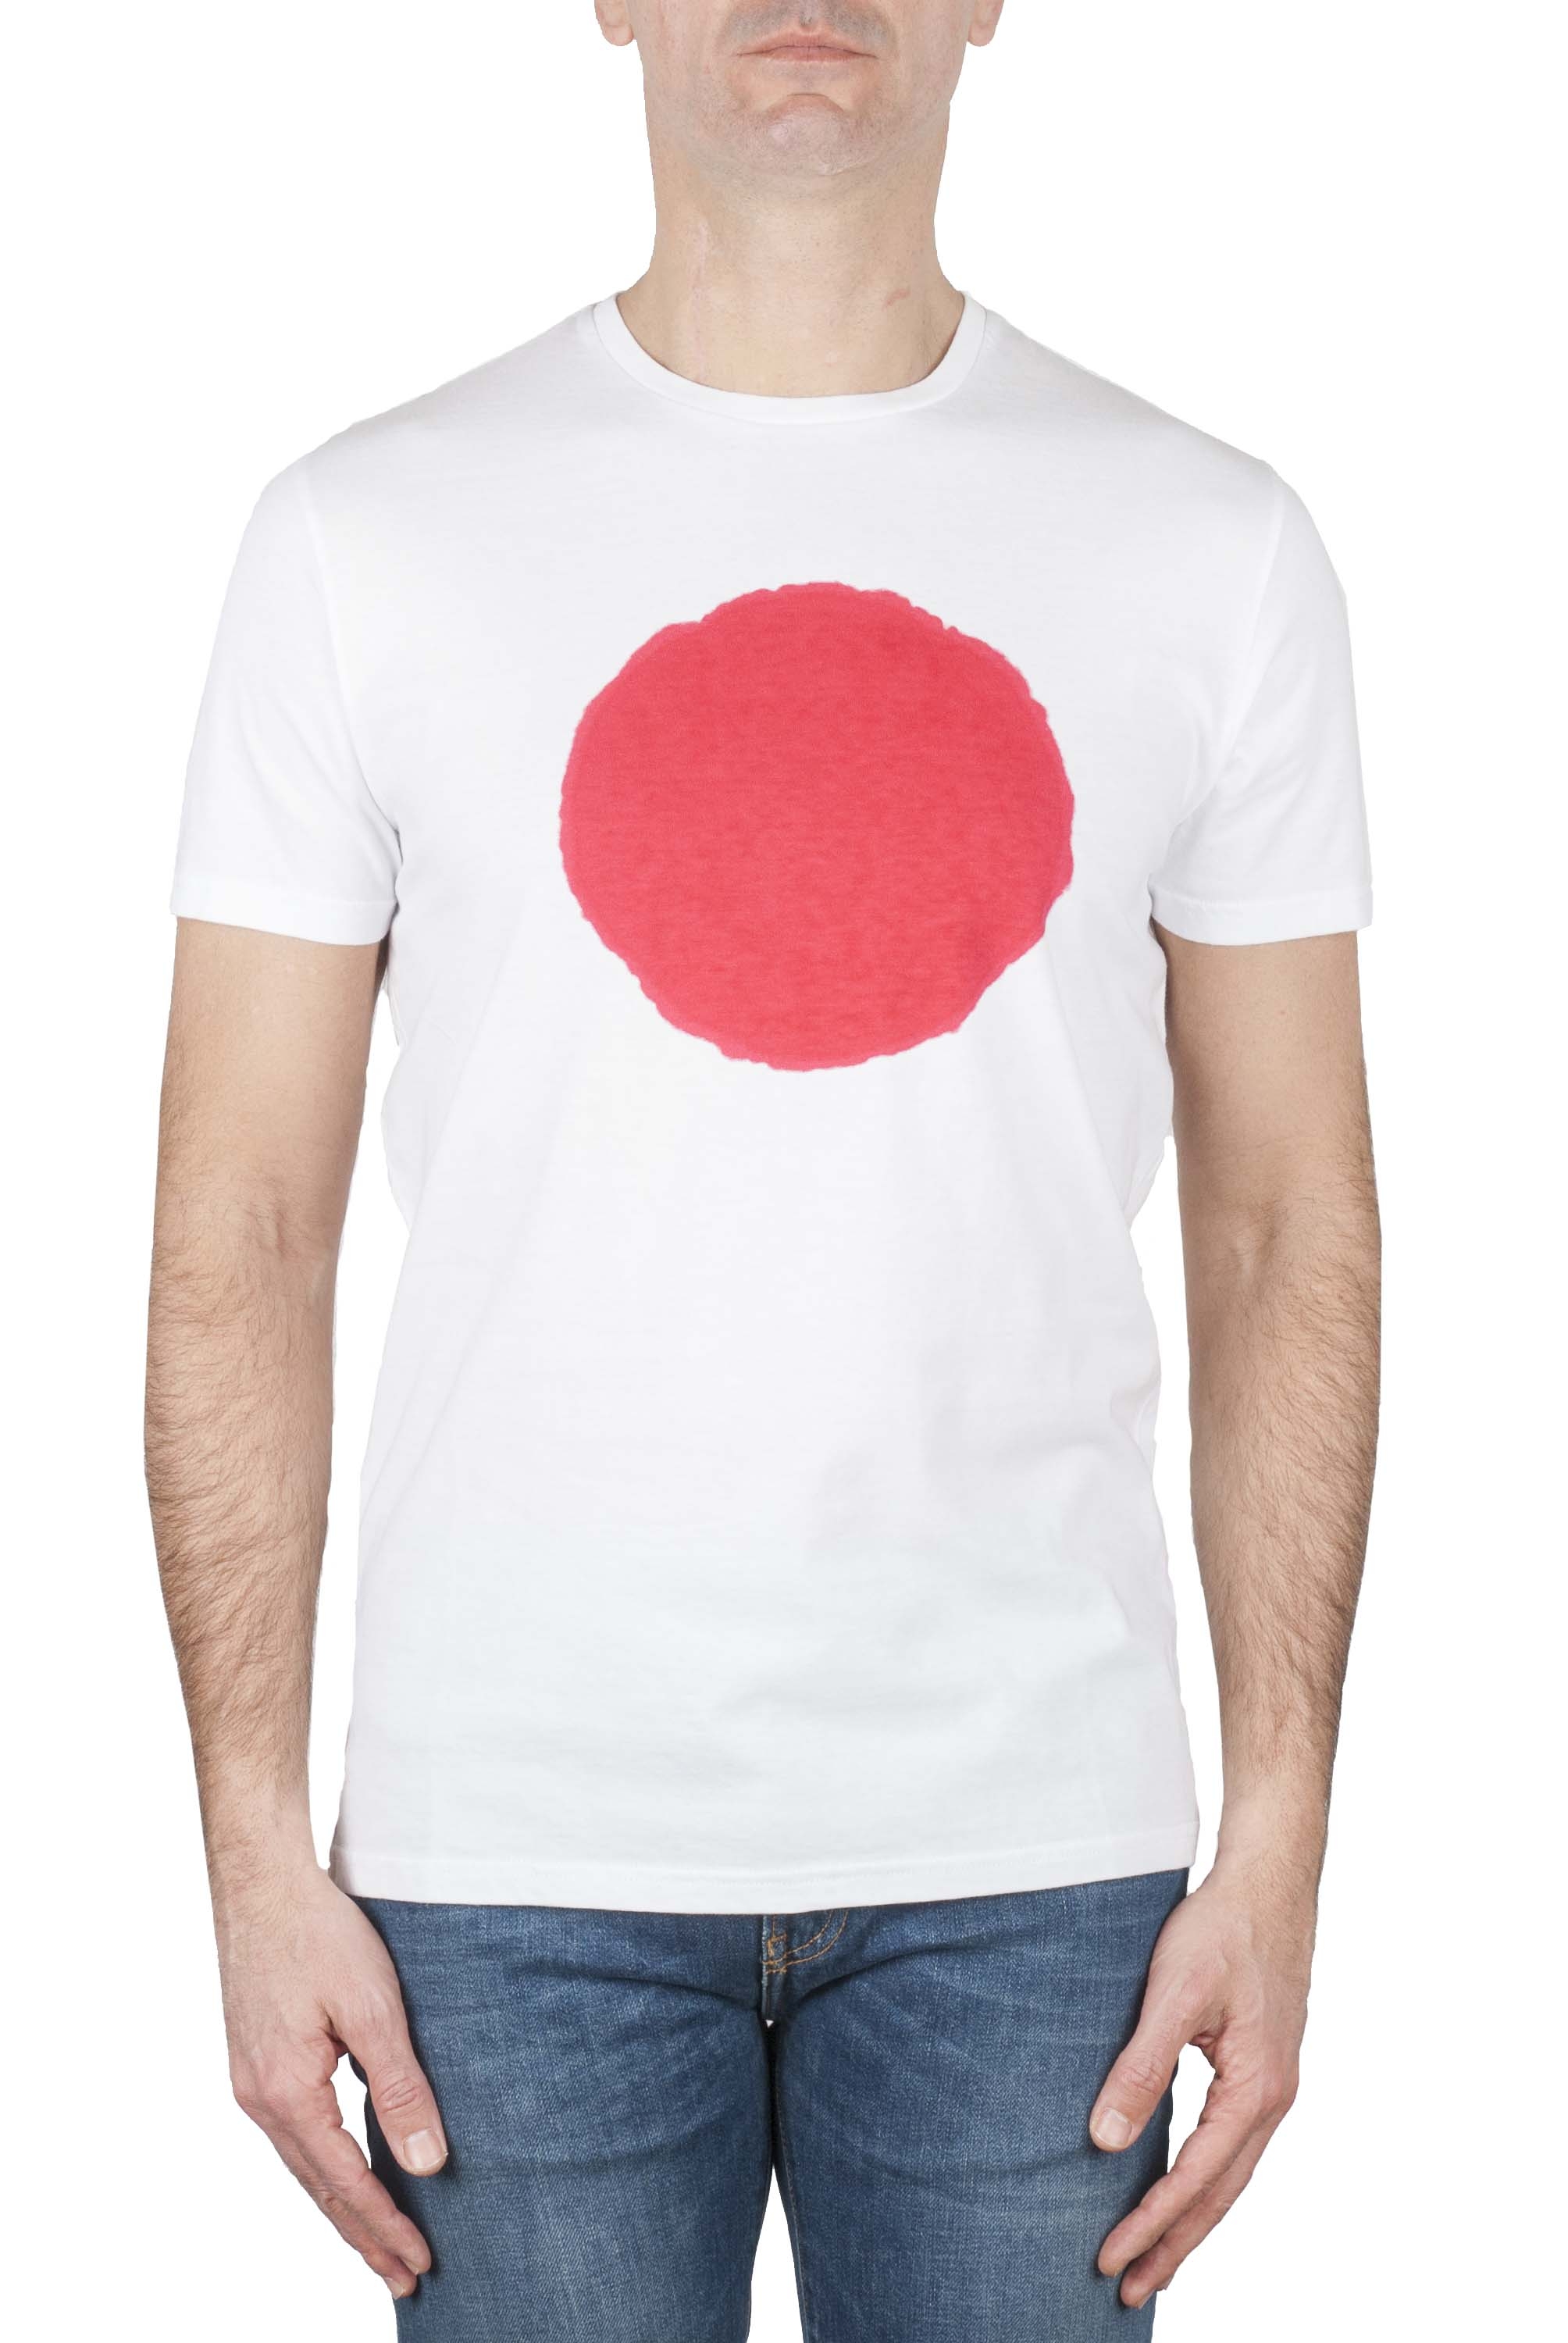 SBU 02848_2020SS 赤と白のプリントされたグラフィックの古典的な半袖綿ラウンドネックtシャツ 01